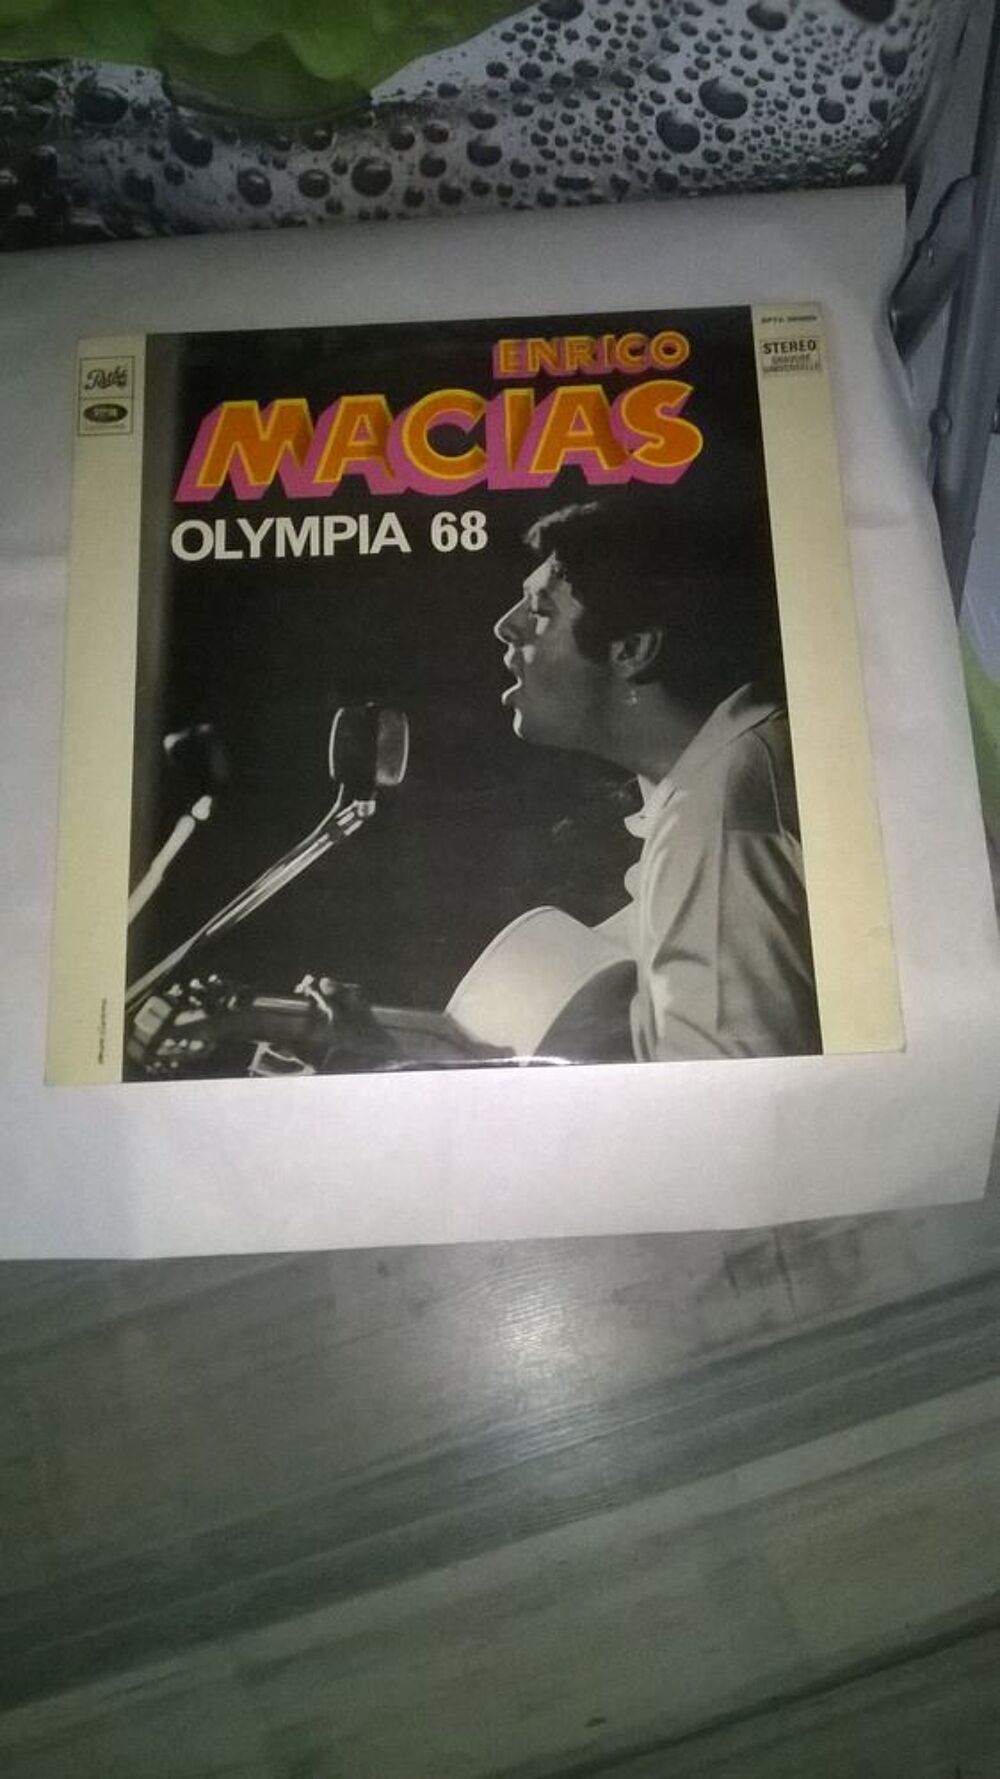 Vinyle Enrico Macias 
Olympia 68
1968
Excellent etat
Int CD et vinyles